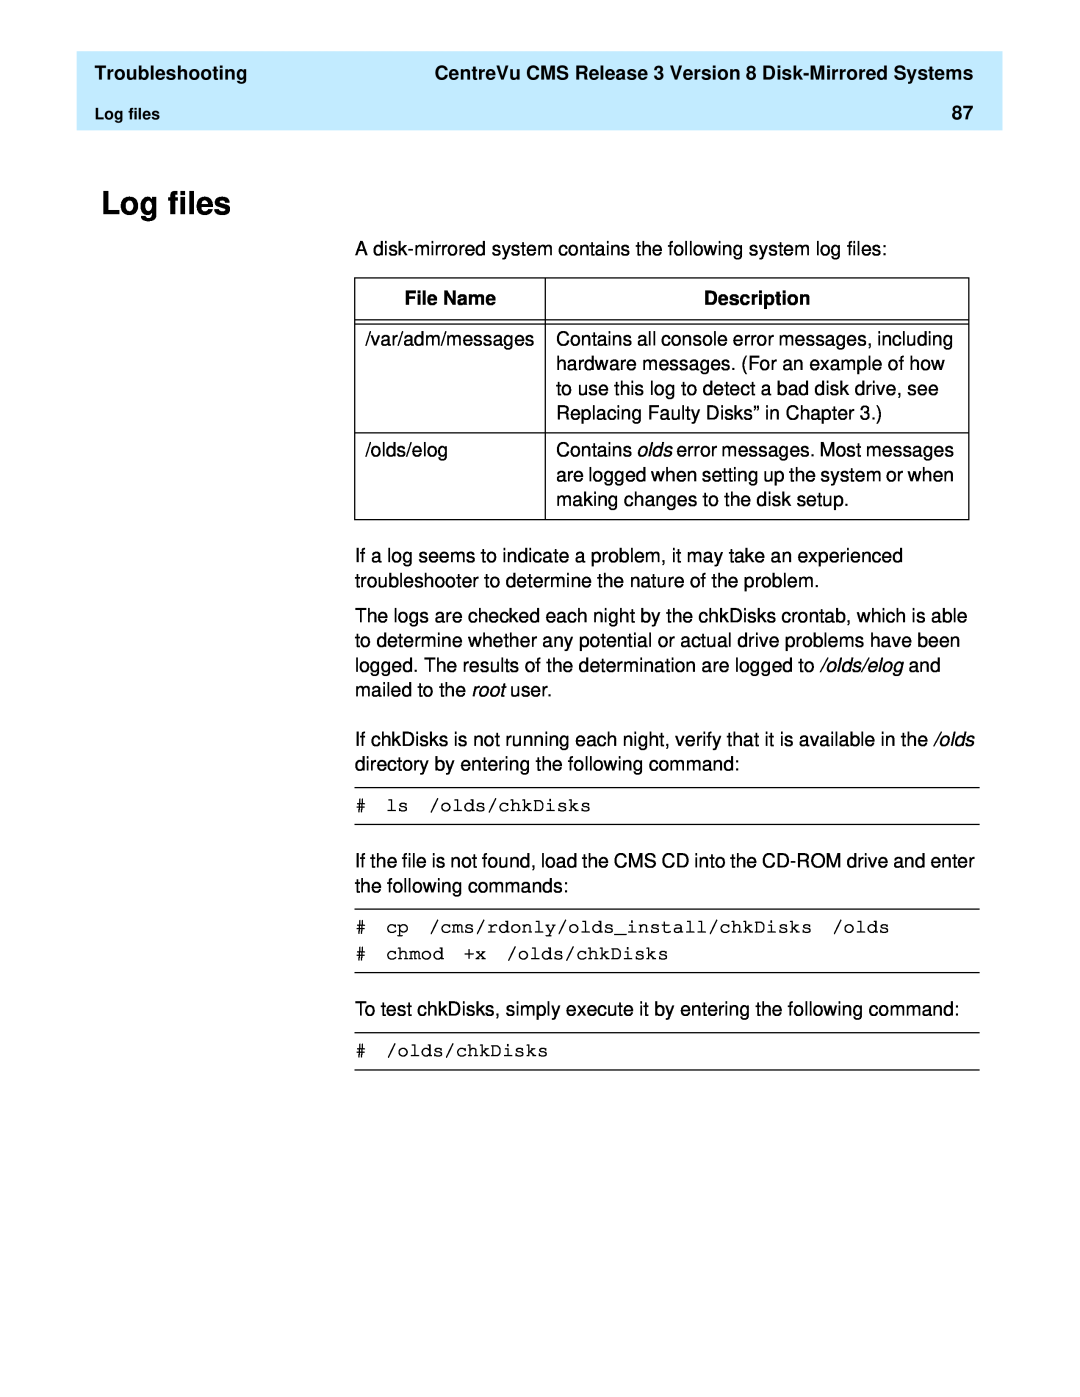 Lucent Technologies 585-210-940 manual Log files, Troubleshooting, File Name, Description 